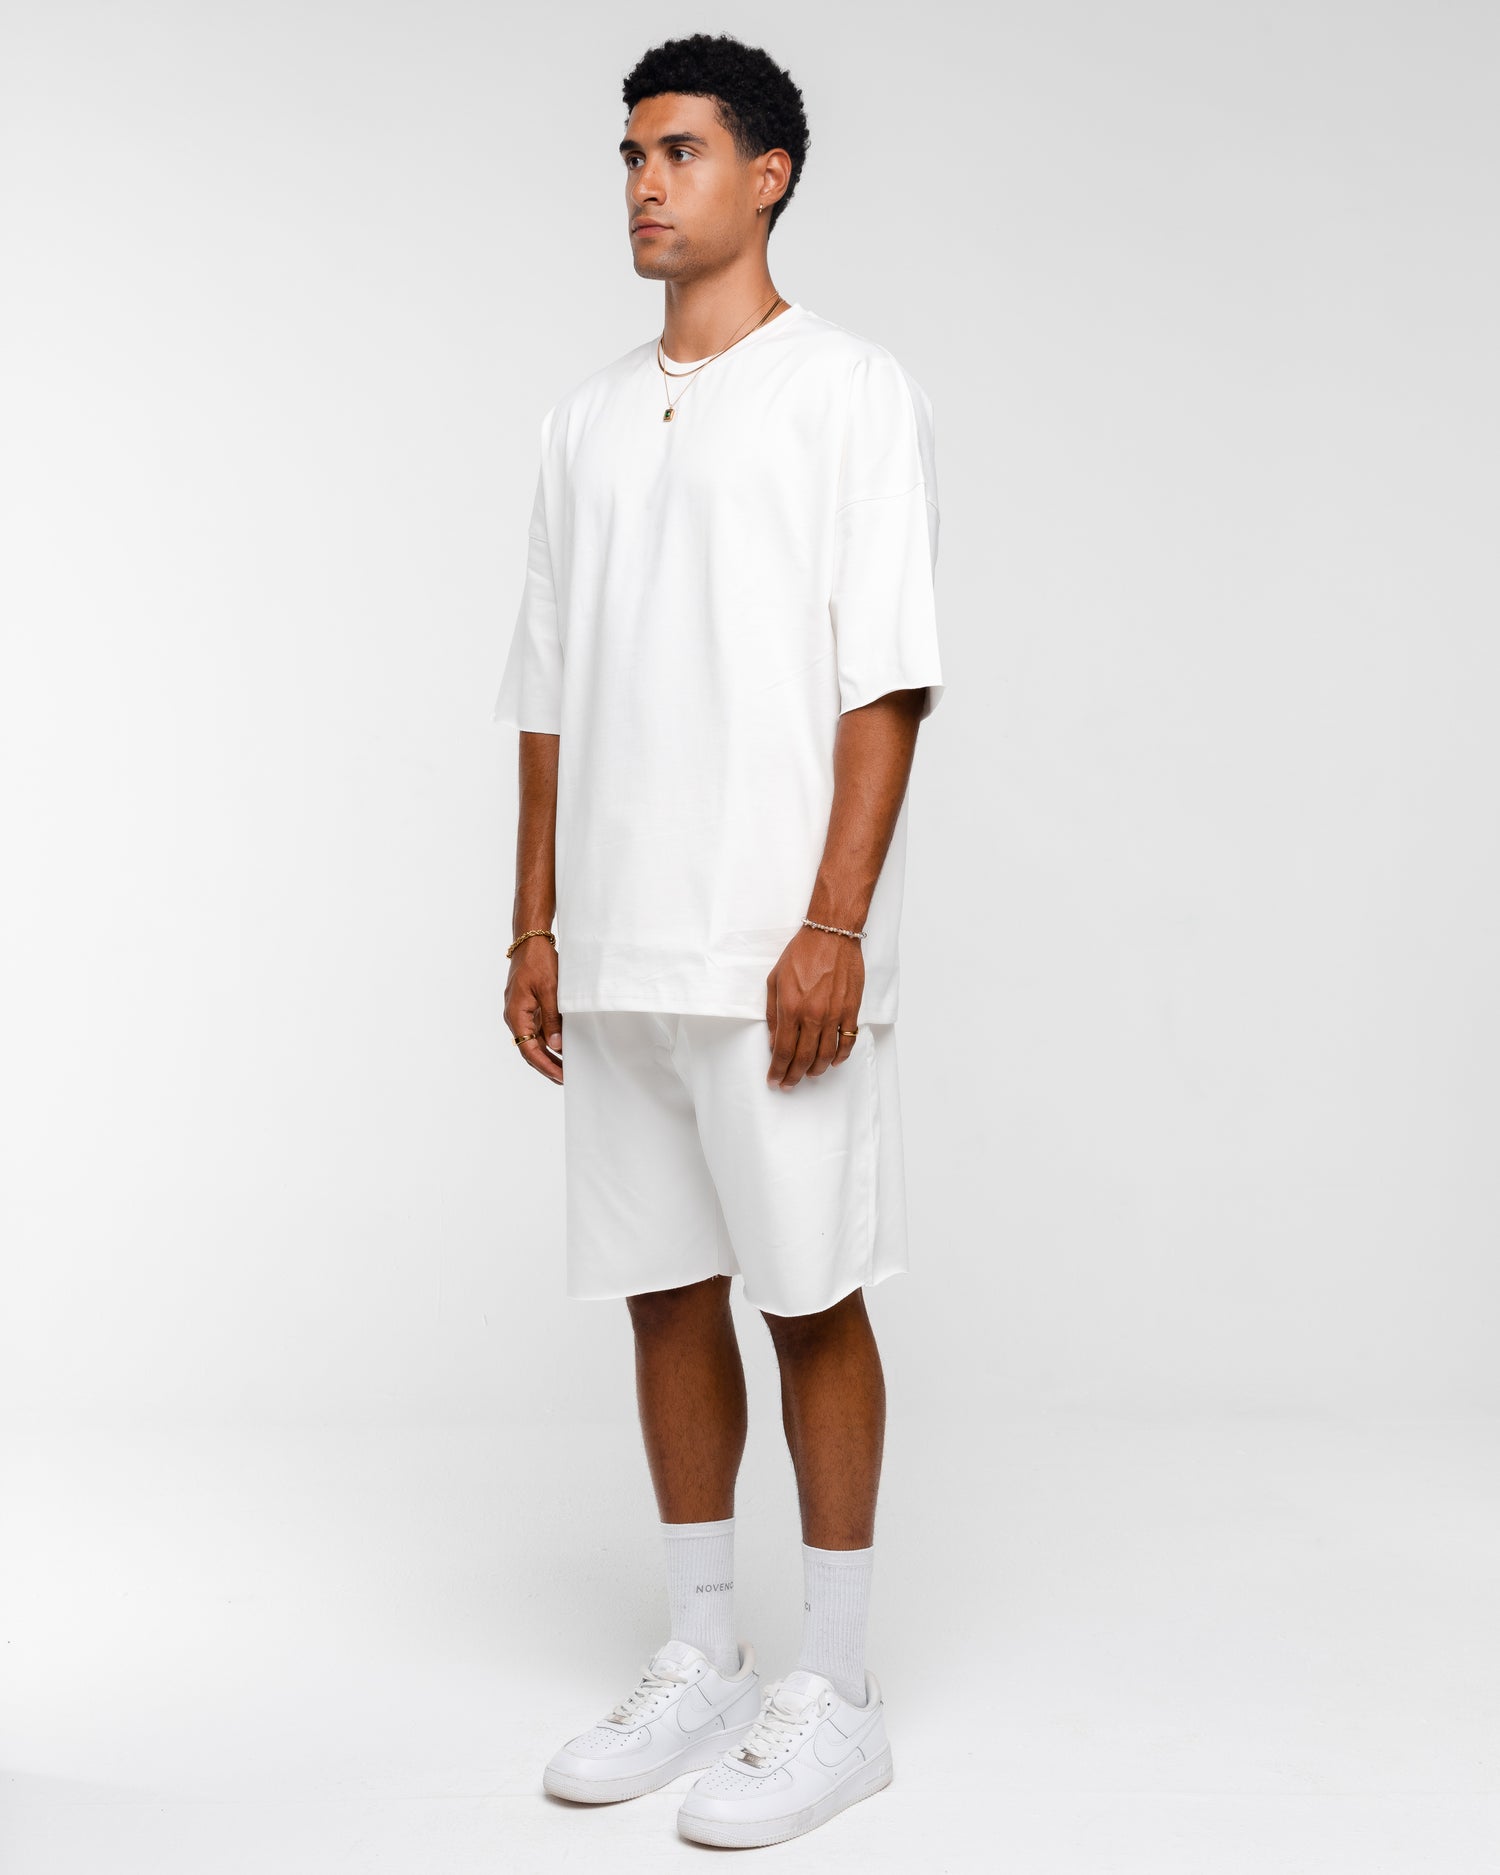 T-shirt&short white set